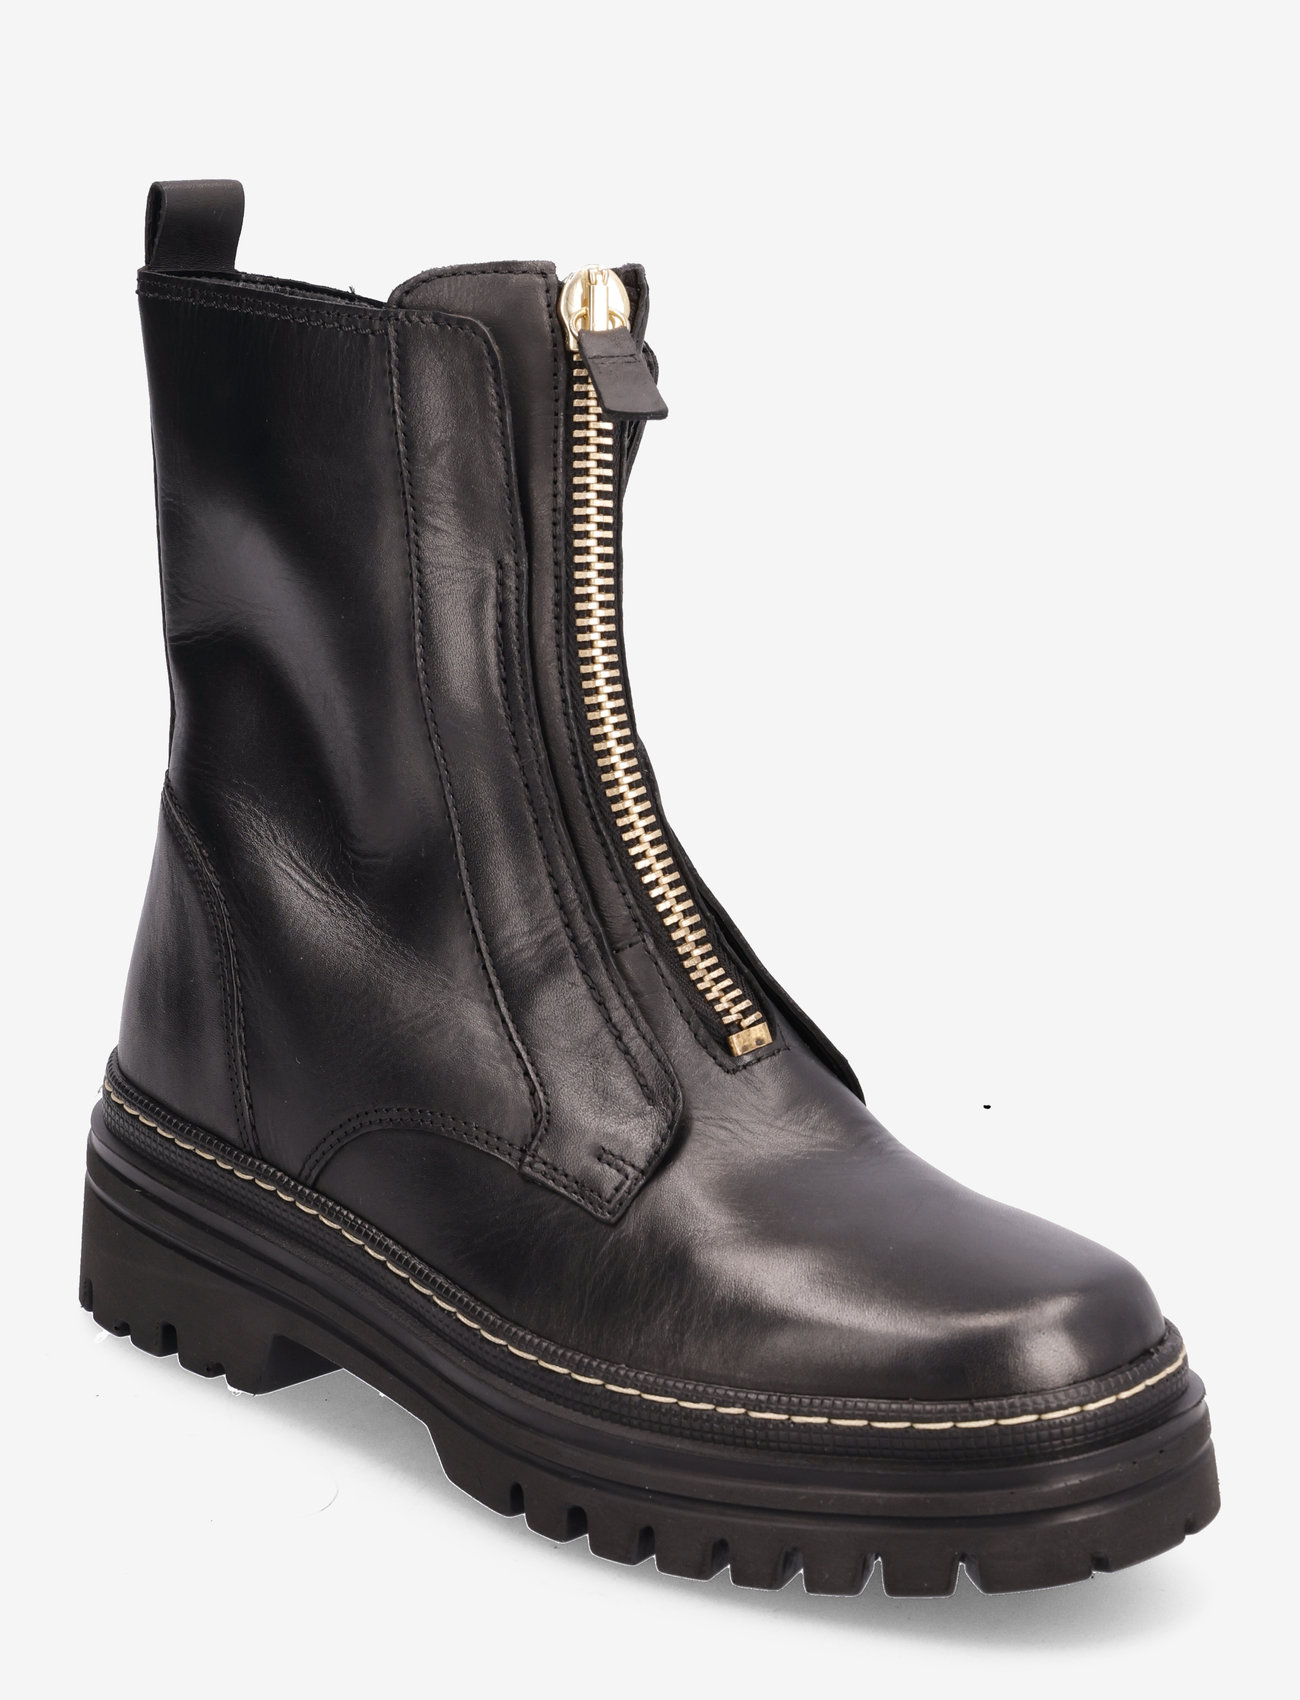 Gabor - Ankle boot - flache stiefeletten - black - 0